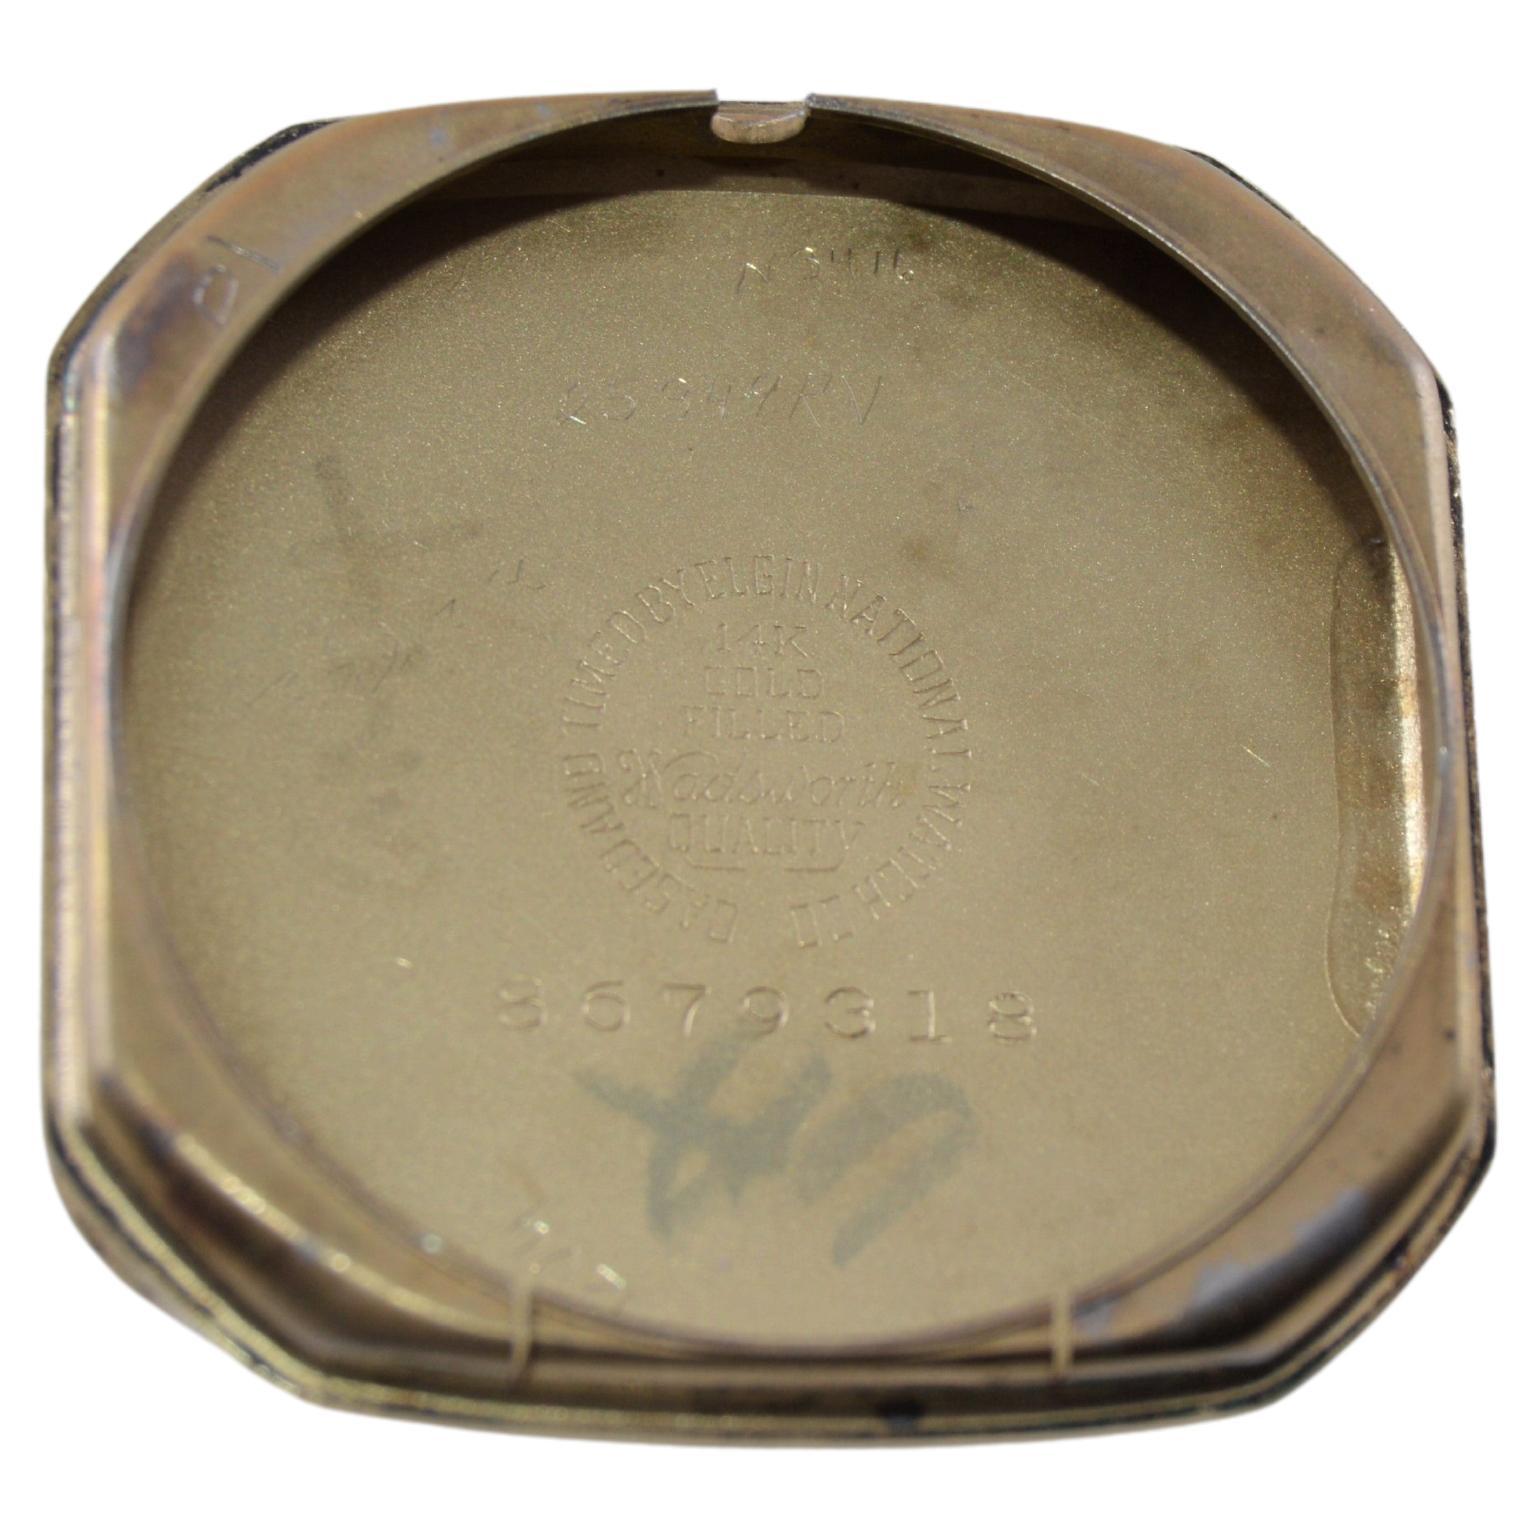 Elgin Yellow Gold Filled Tonneau Shape Watch Circa 1931 with Original Dial 8